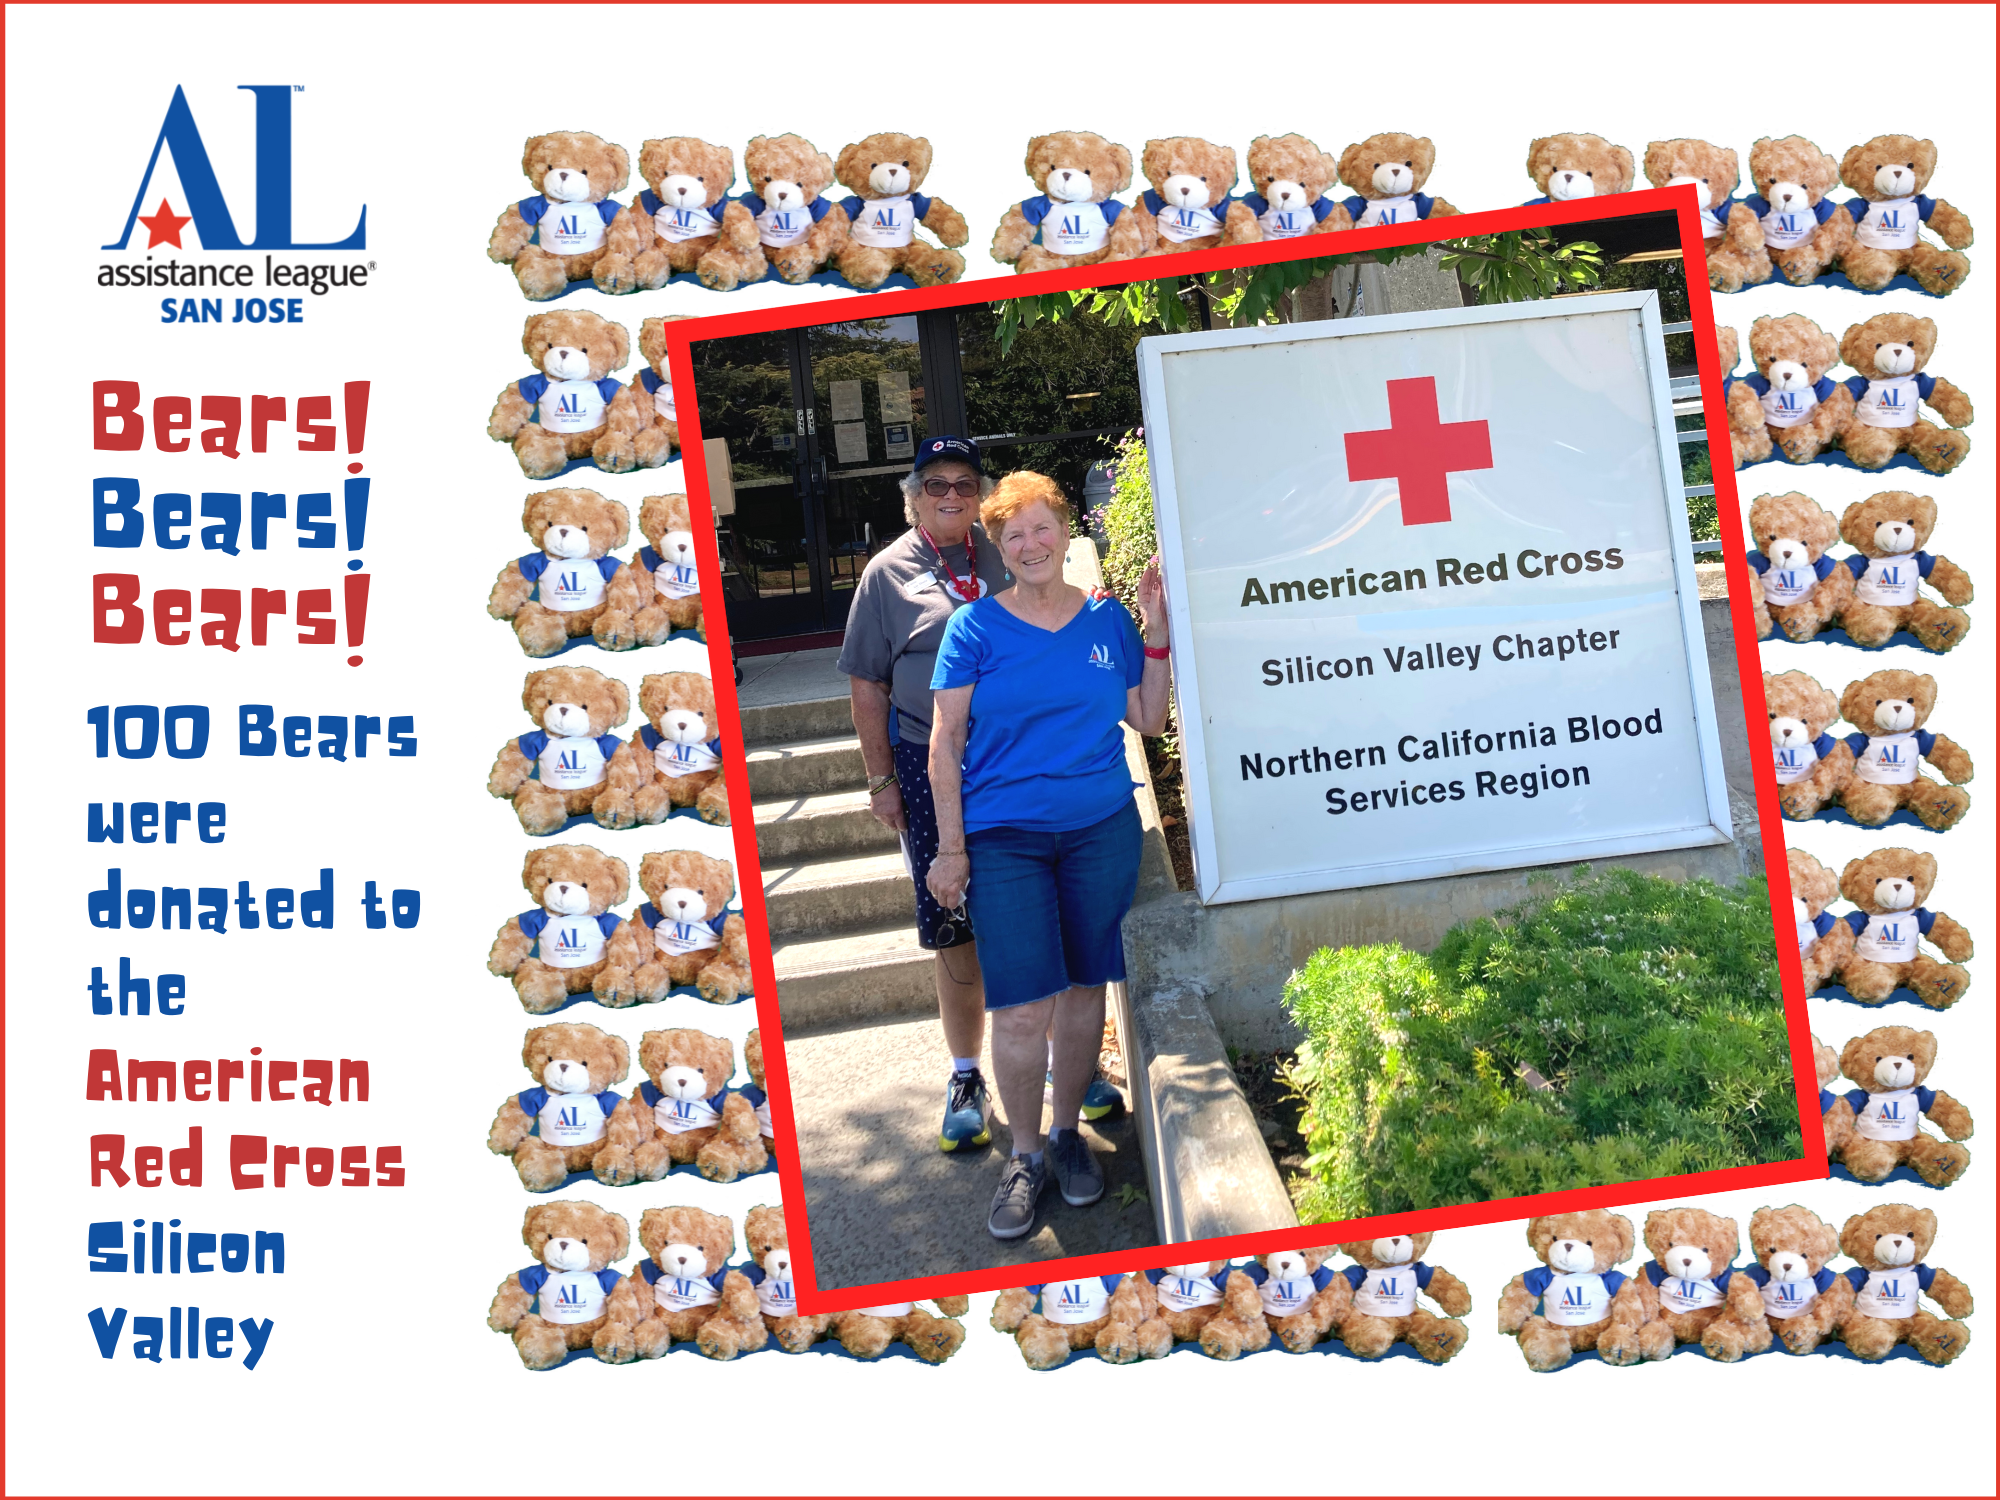 Hug-a-Bear Donations to American Red Cross